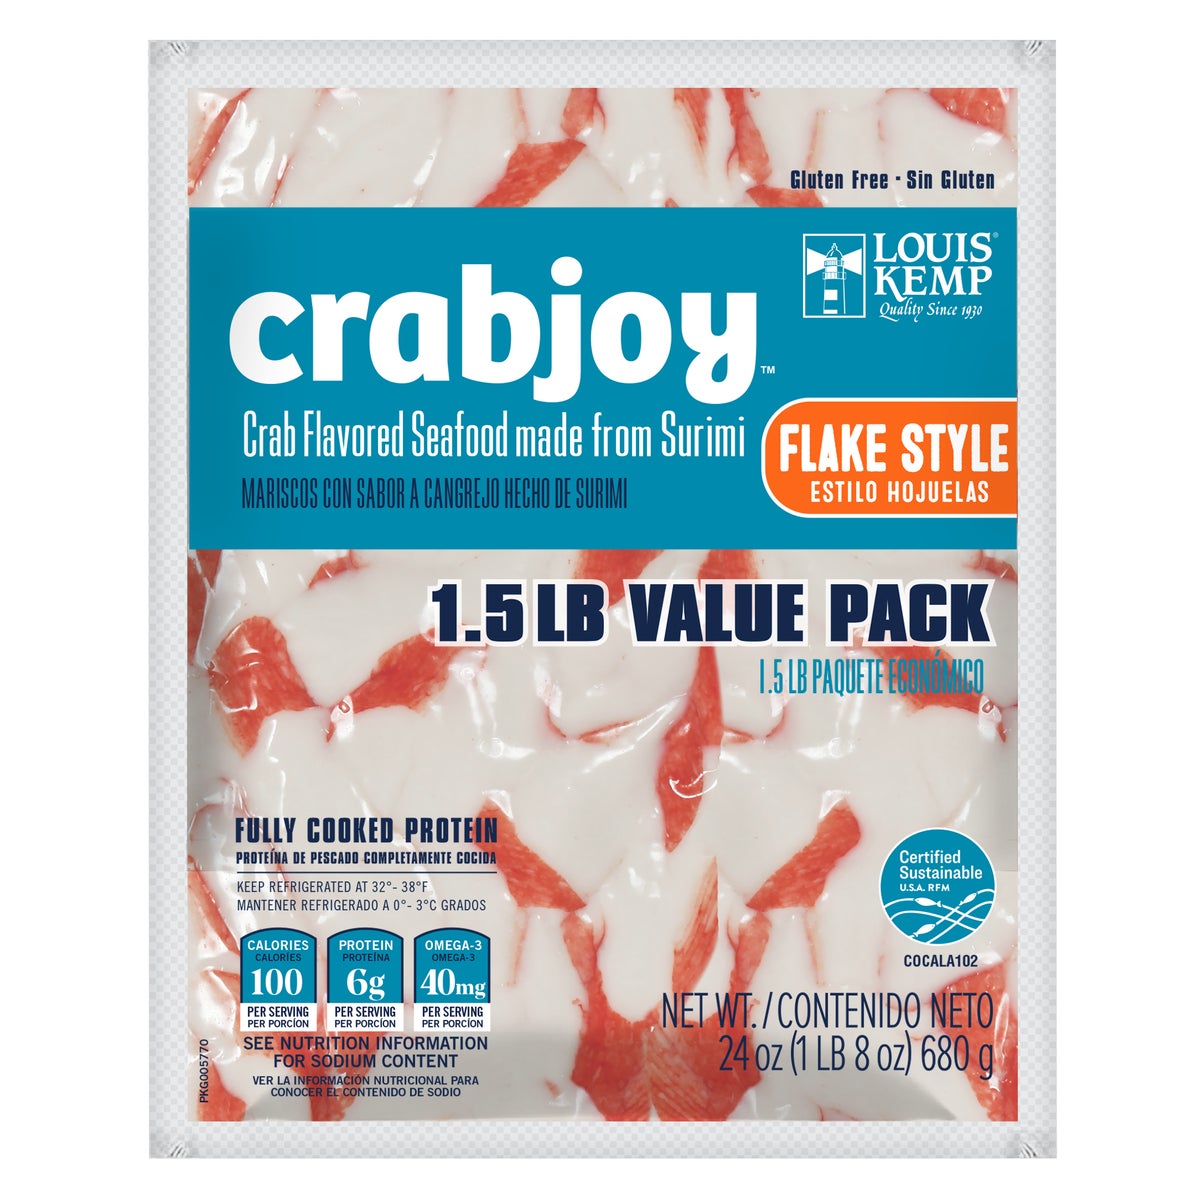 Crabjoy Flake Style